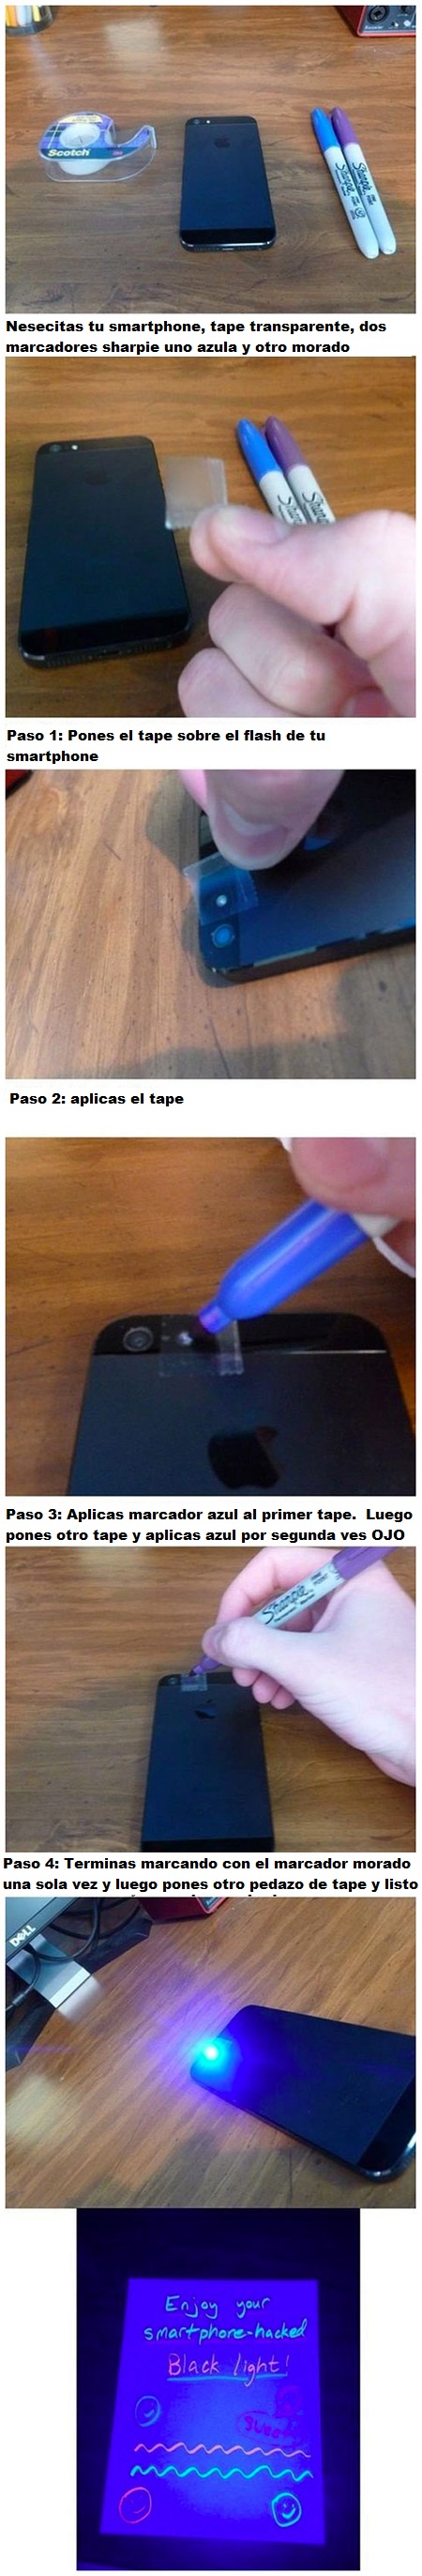 turn your smartphone into a CSI blacklight